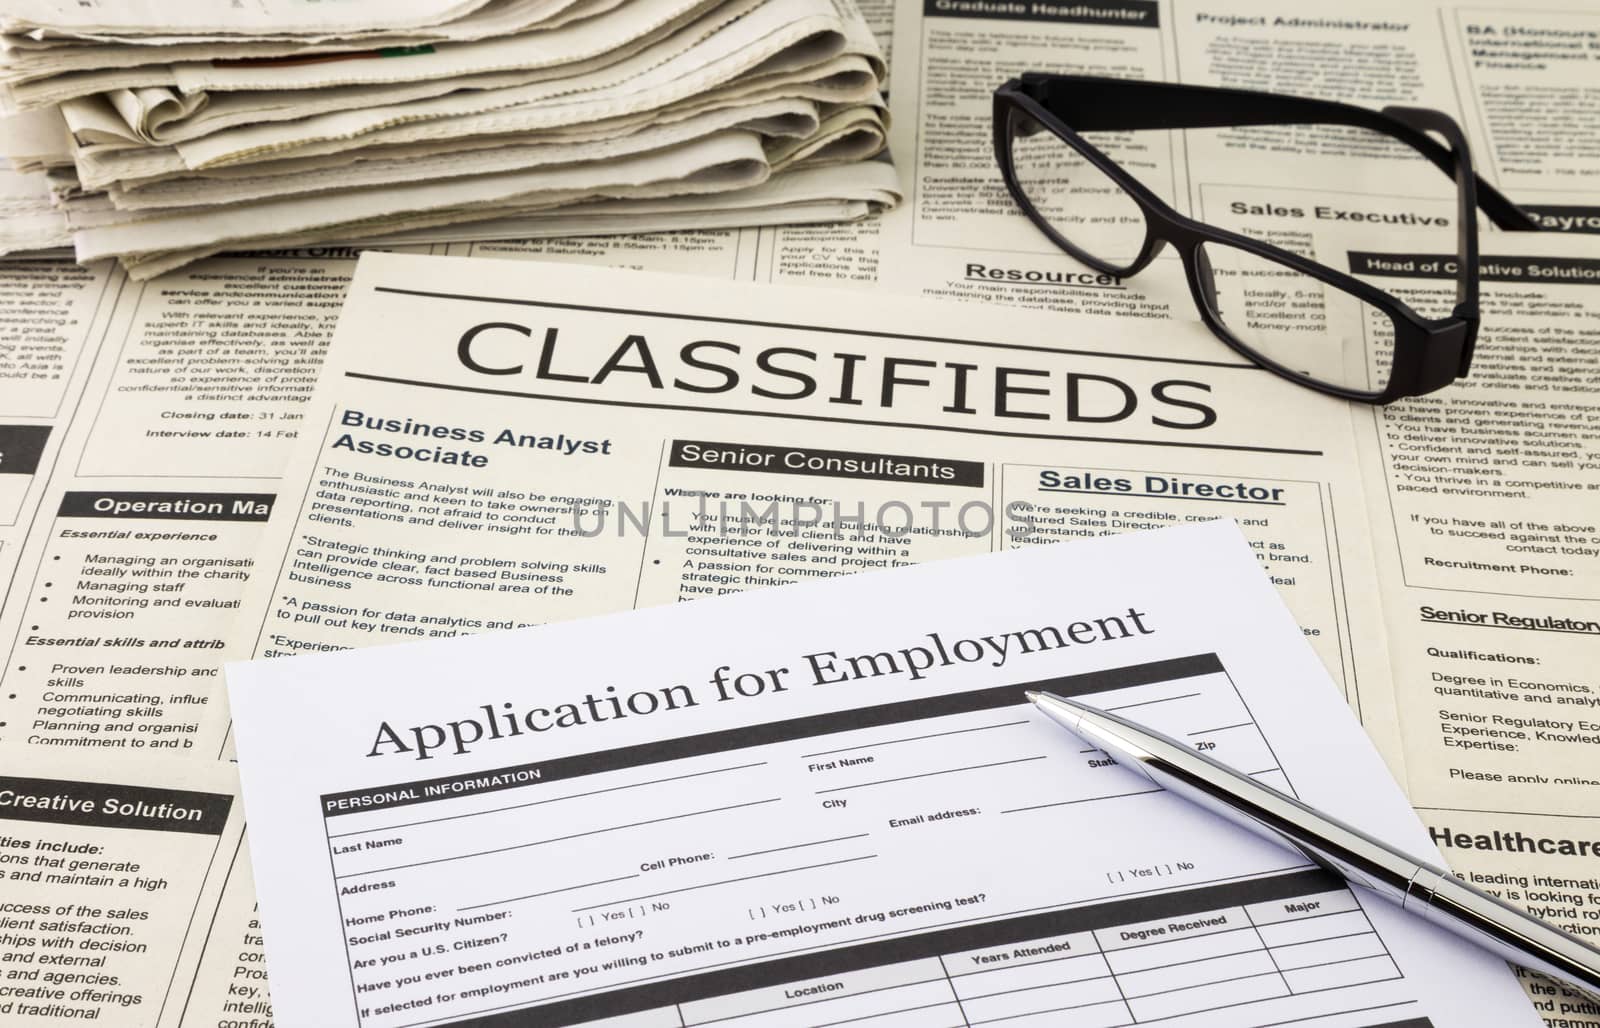 application for employment by vinnstock